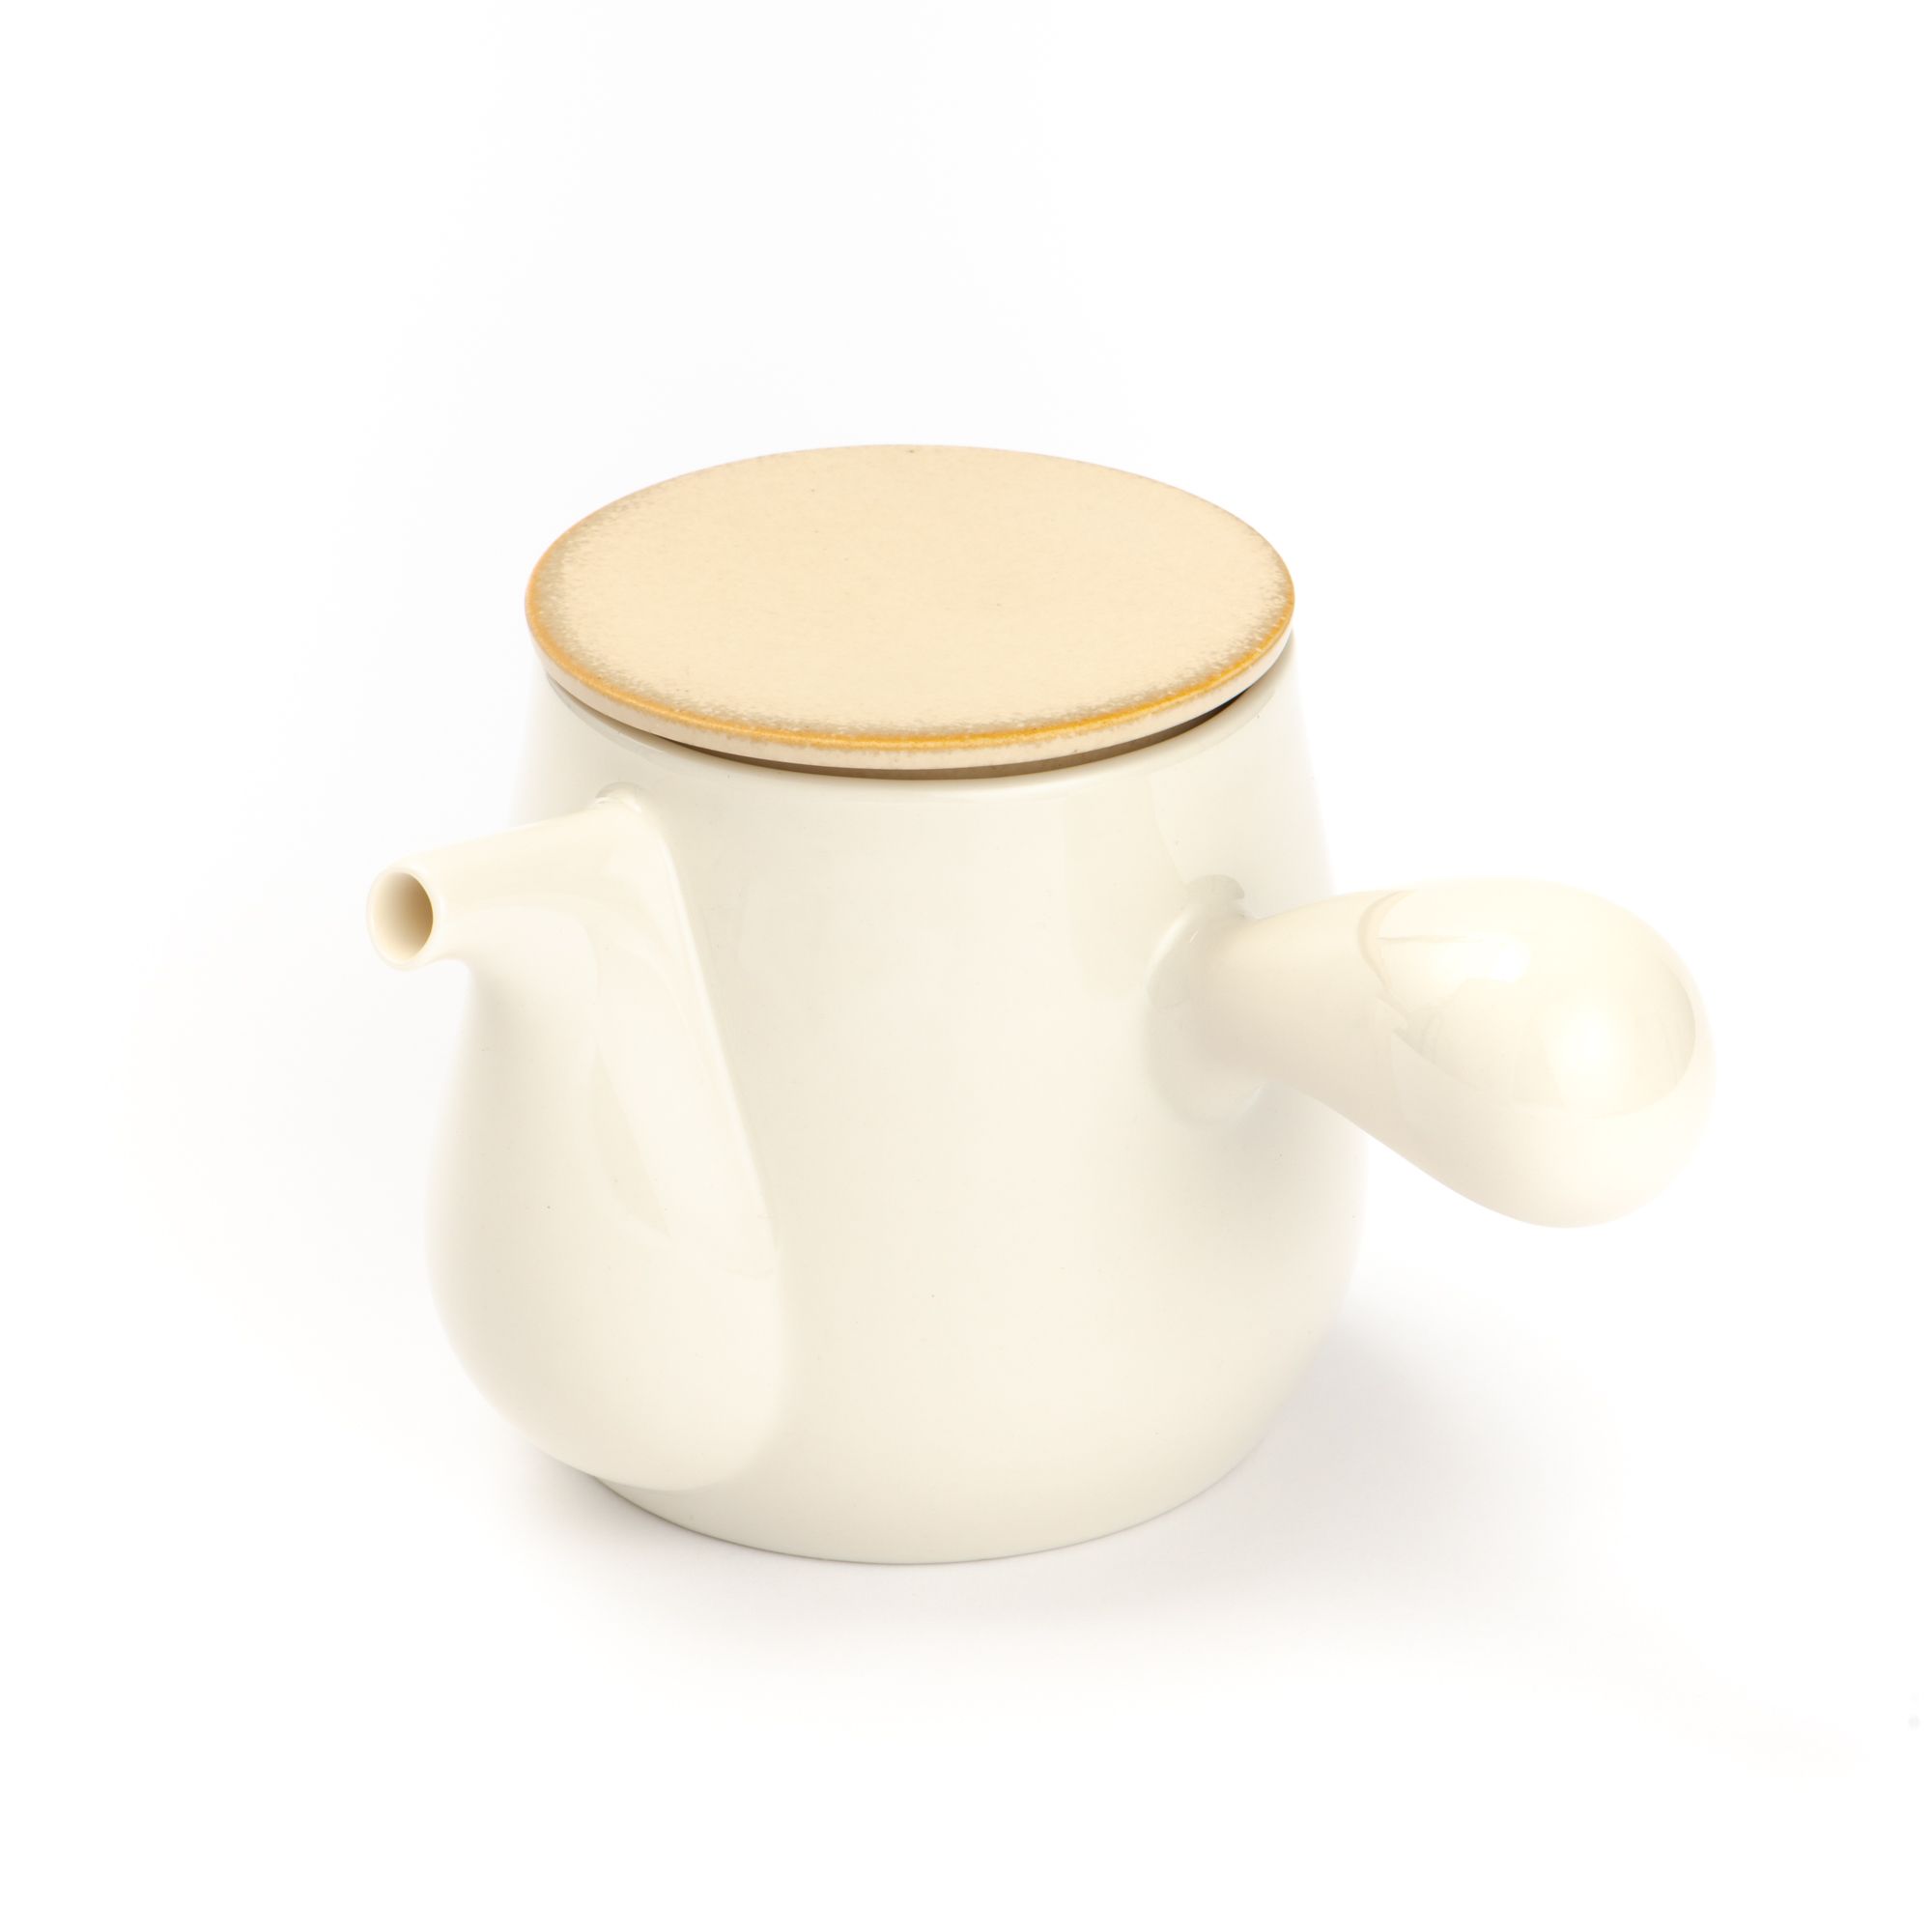 Cierto Bico Japanese Mino Ware Coffee Kettle / Tea Pot - Vanilla White